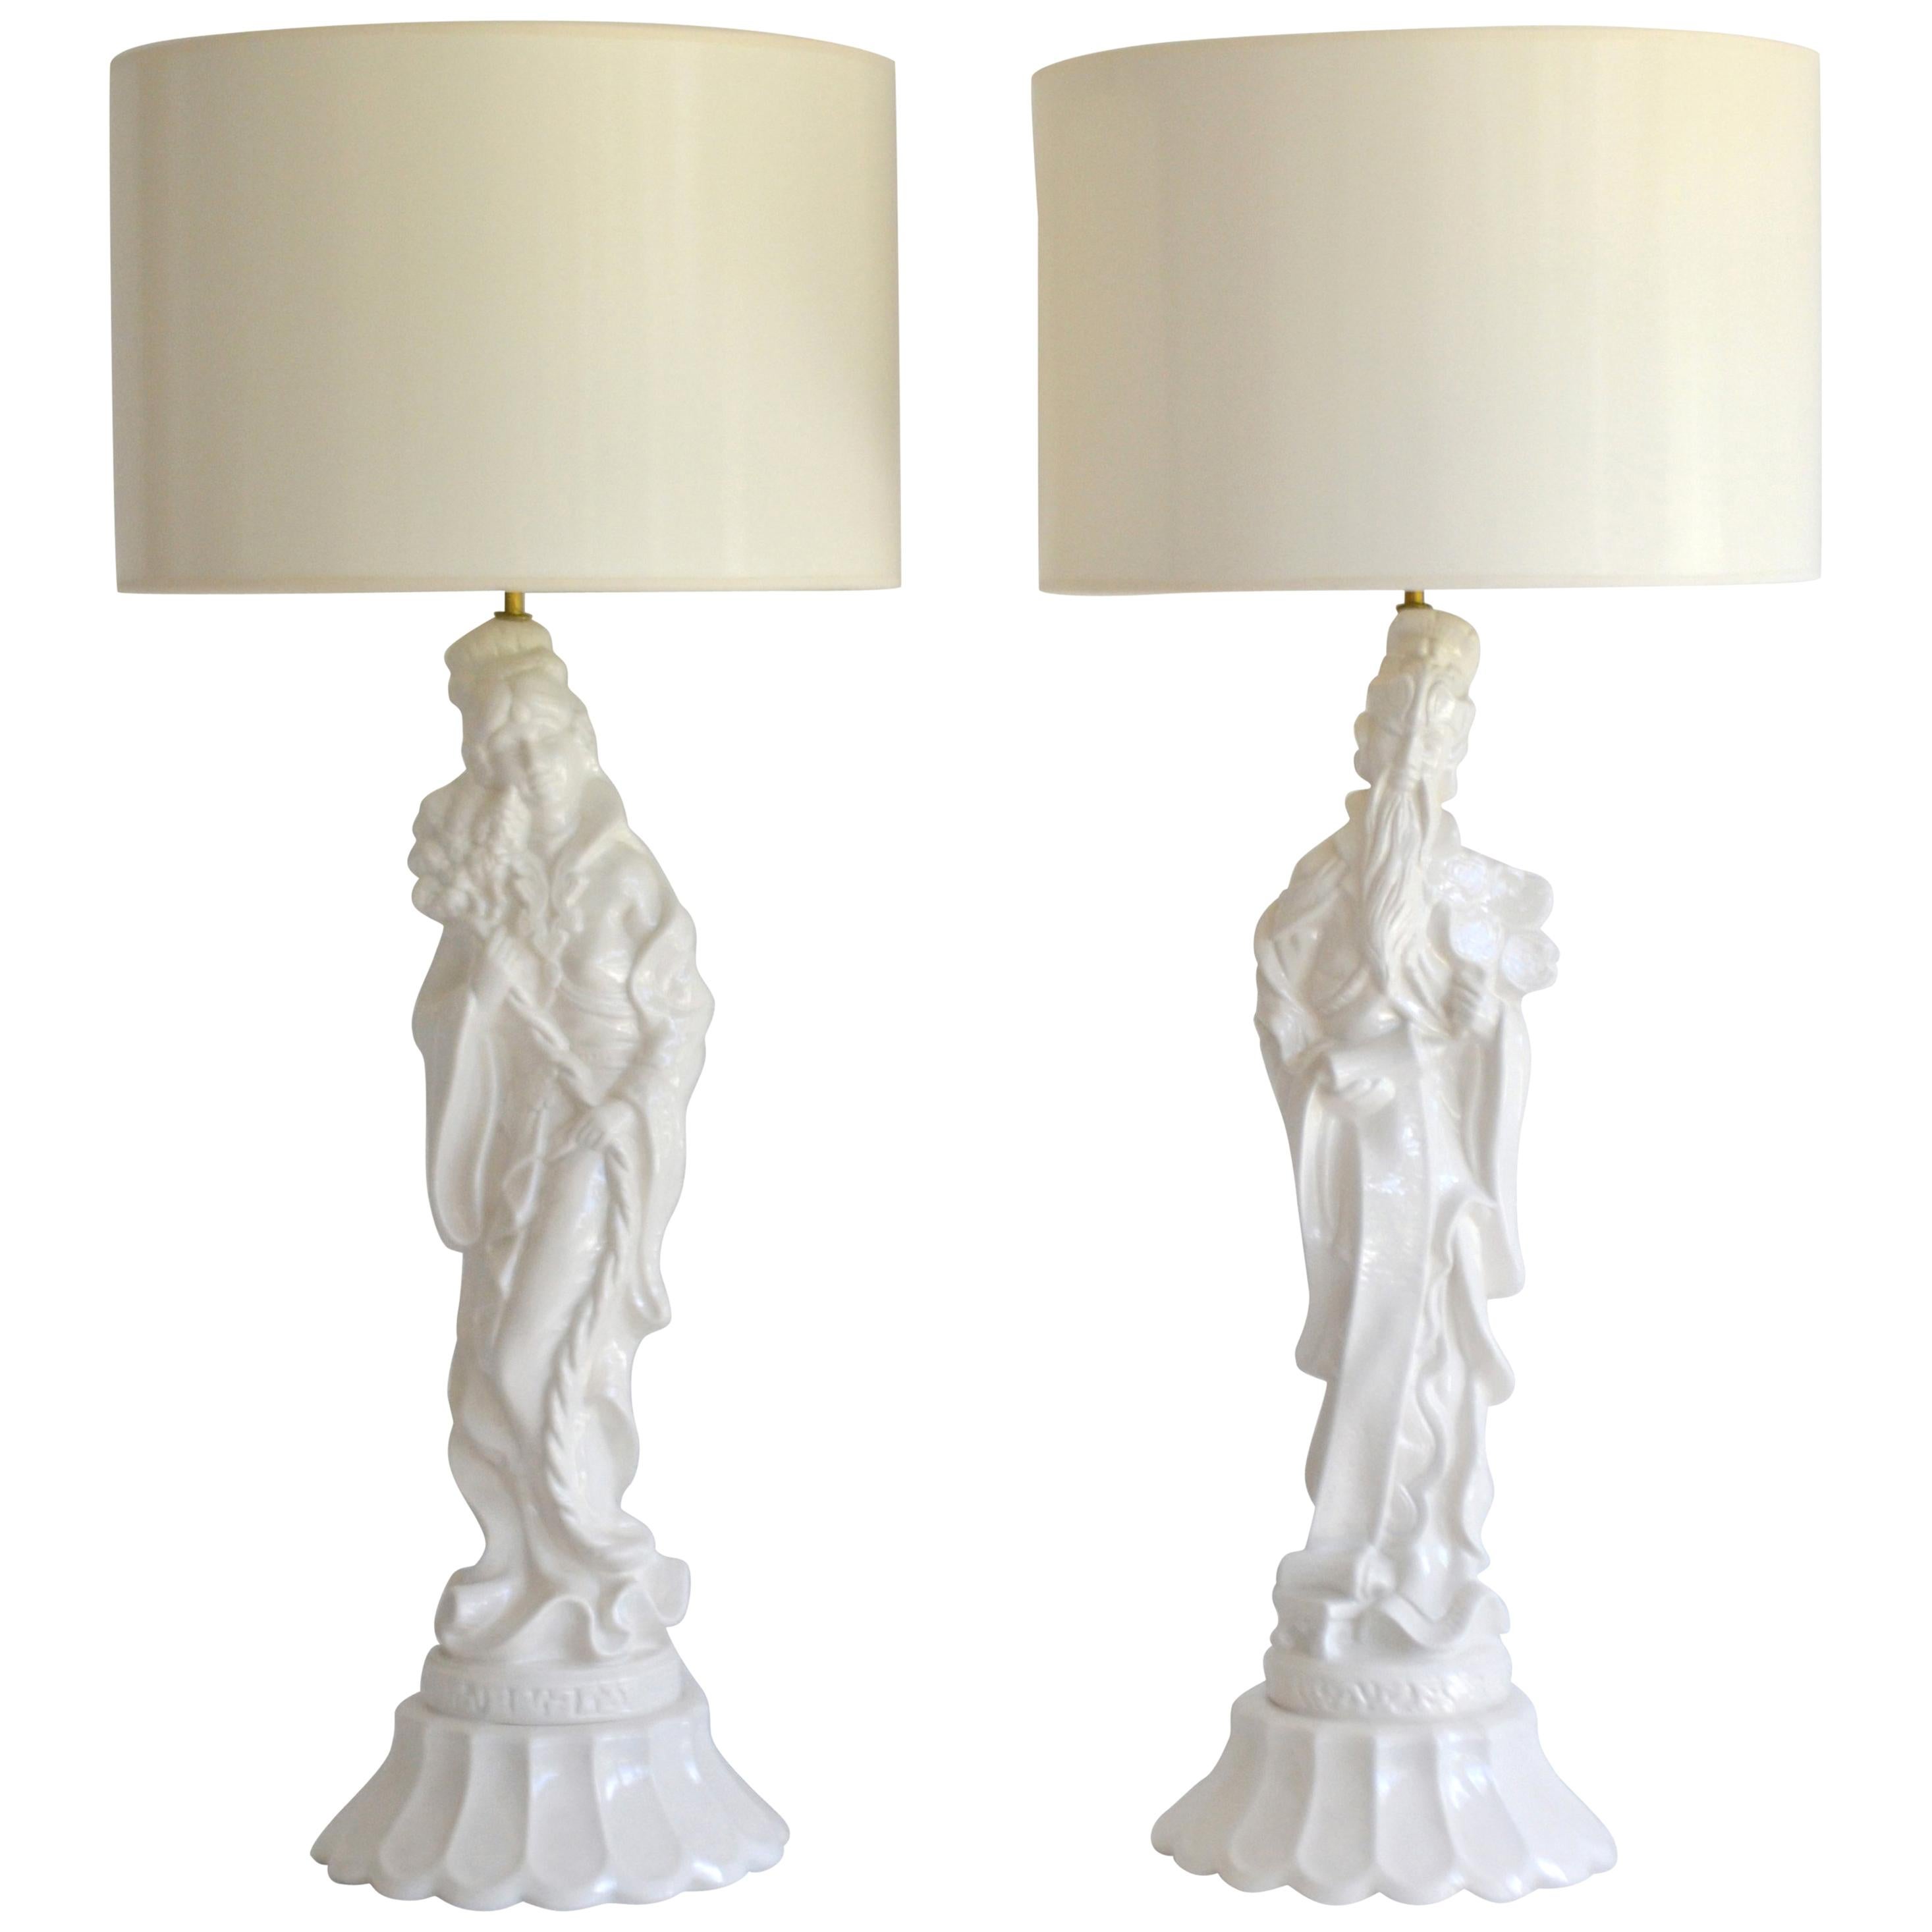 Pair of Hollywood Regency Blanc de Chine Ceramic Table Lamps